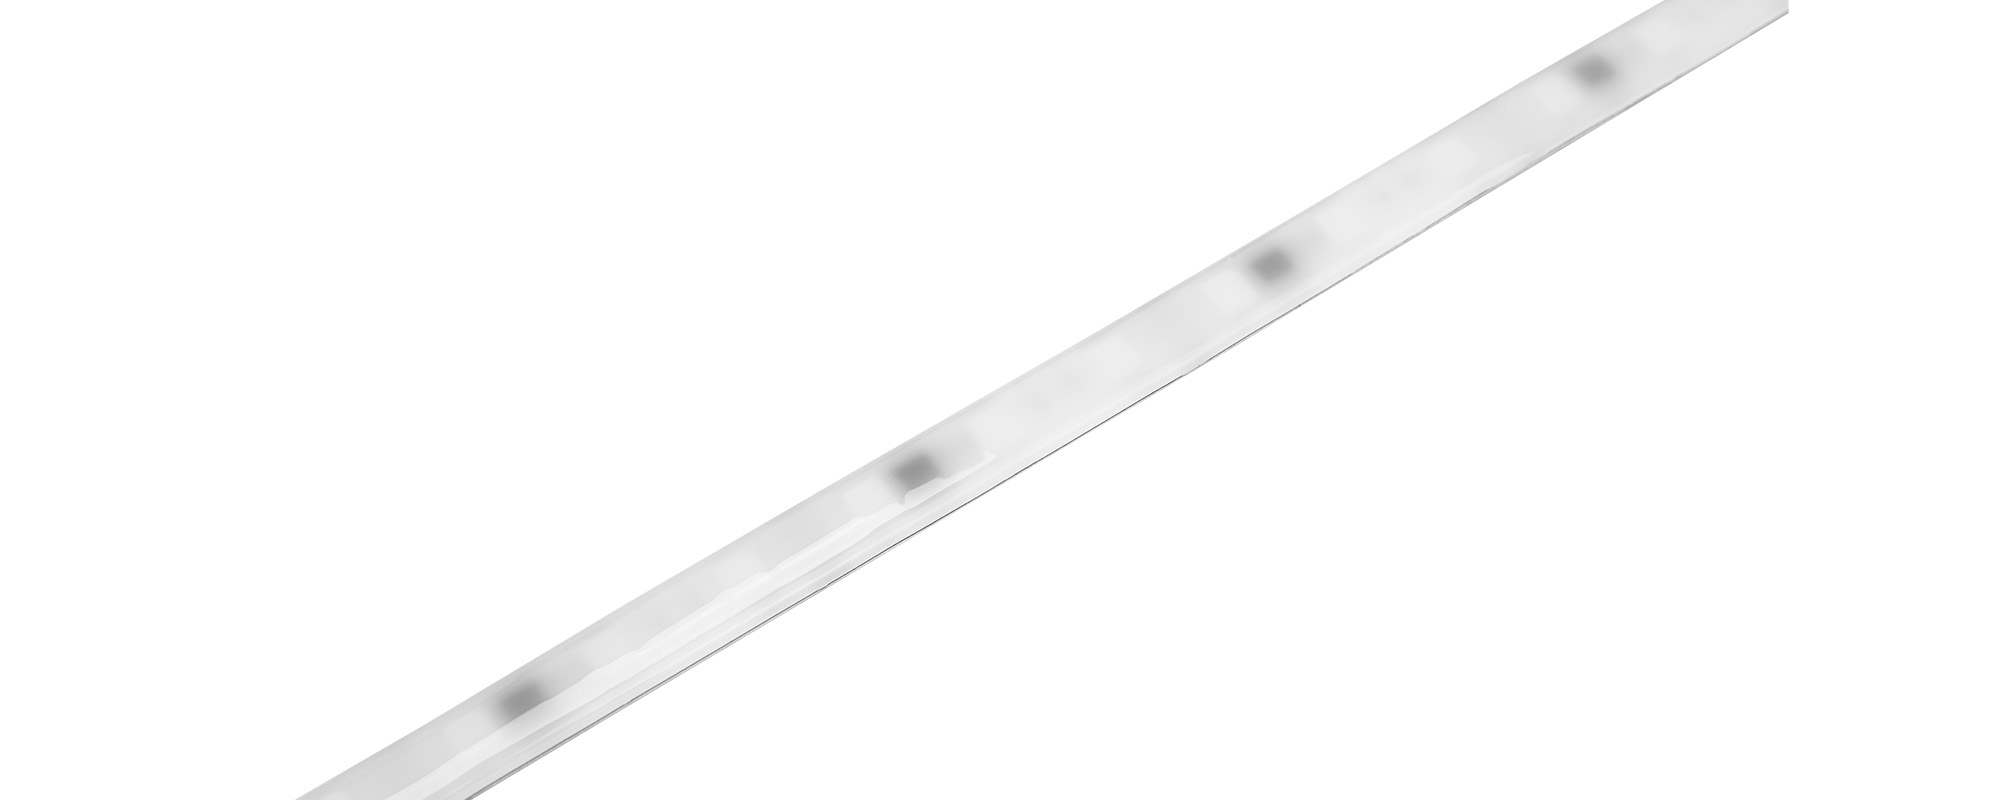 Amaran SM5c LED strip - Unparalleled quality of light